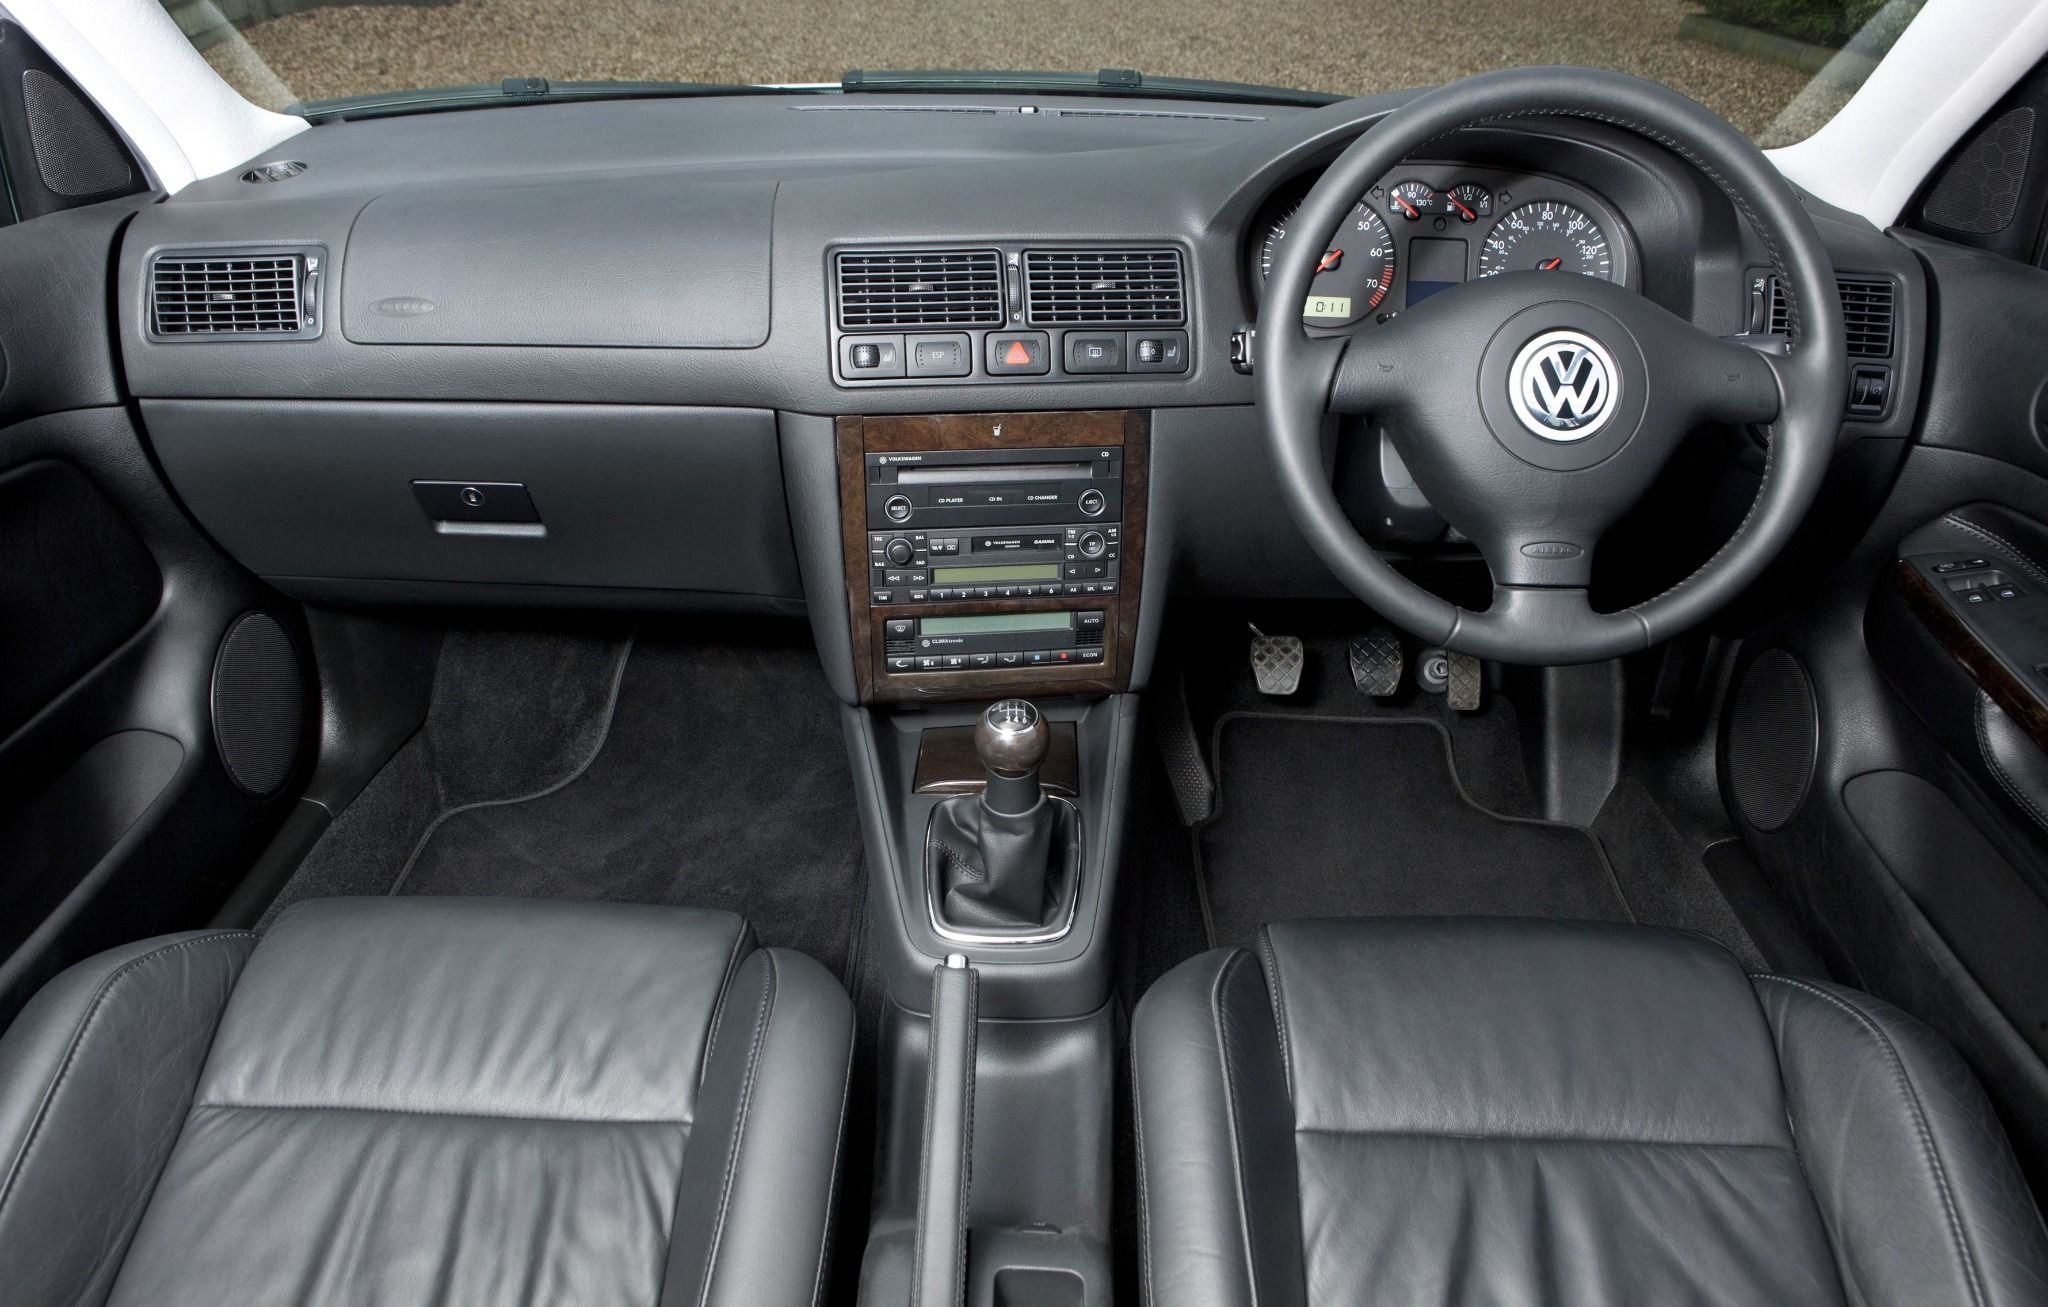 Interior - VW Golf Mark 4